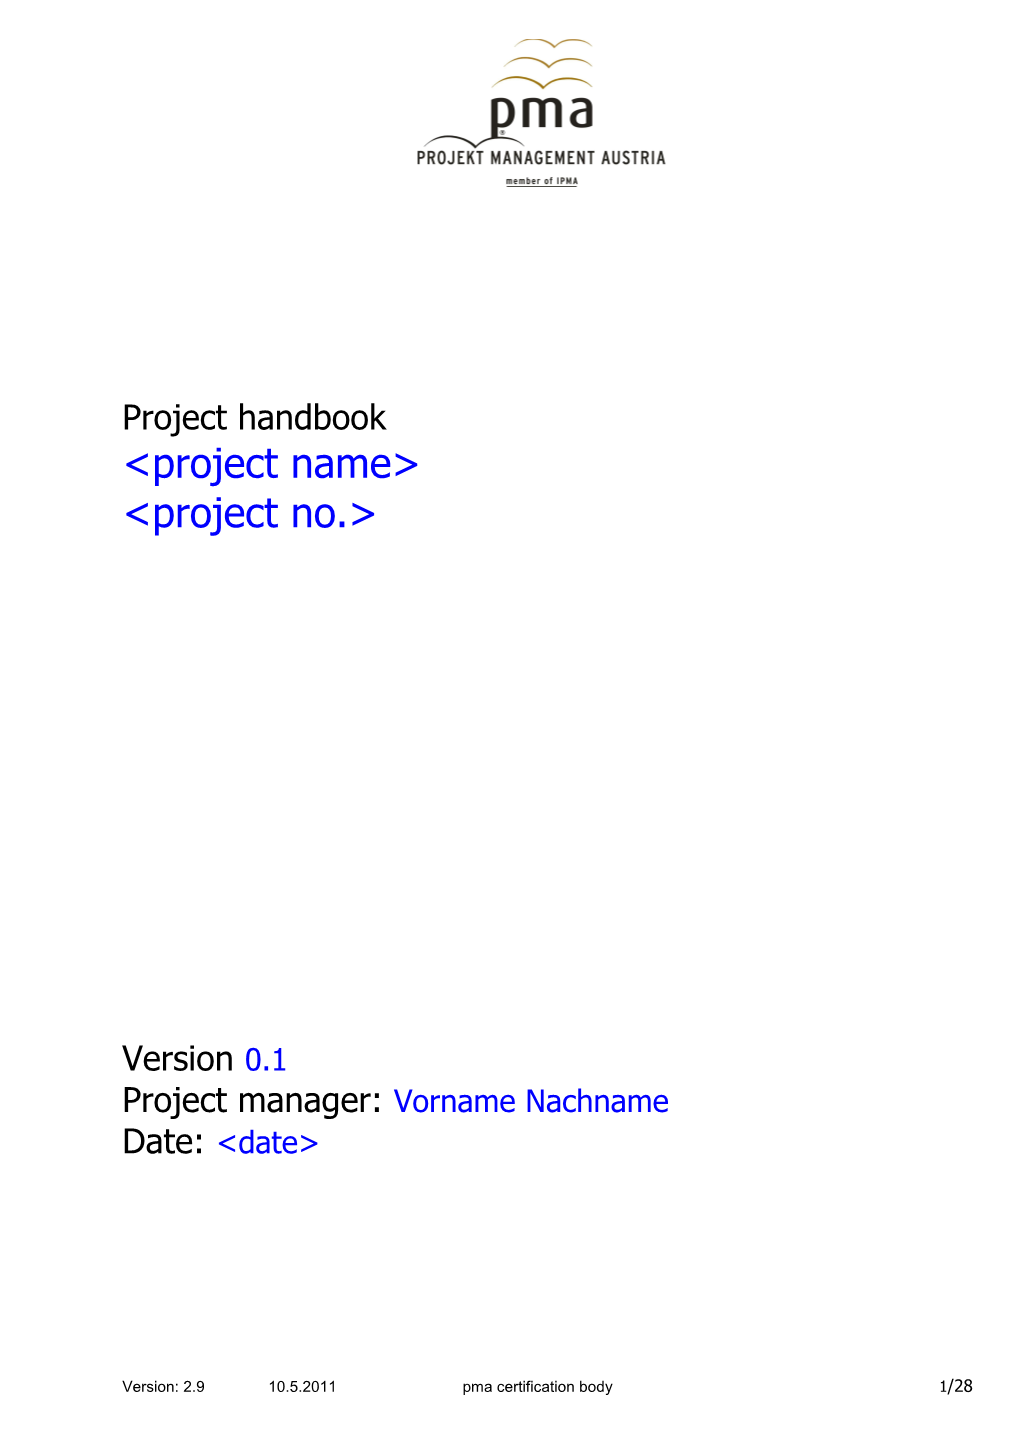 Project Handbook